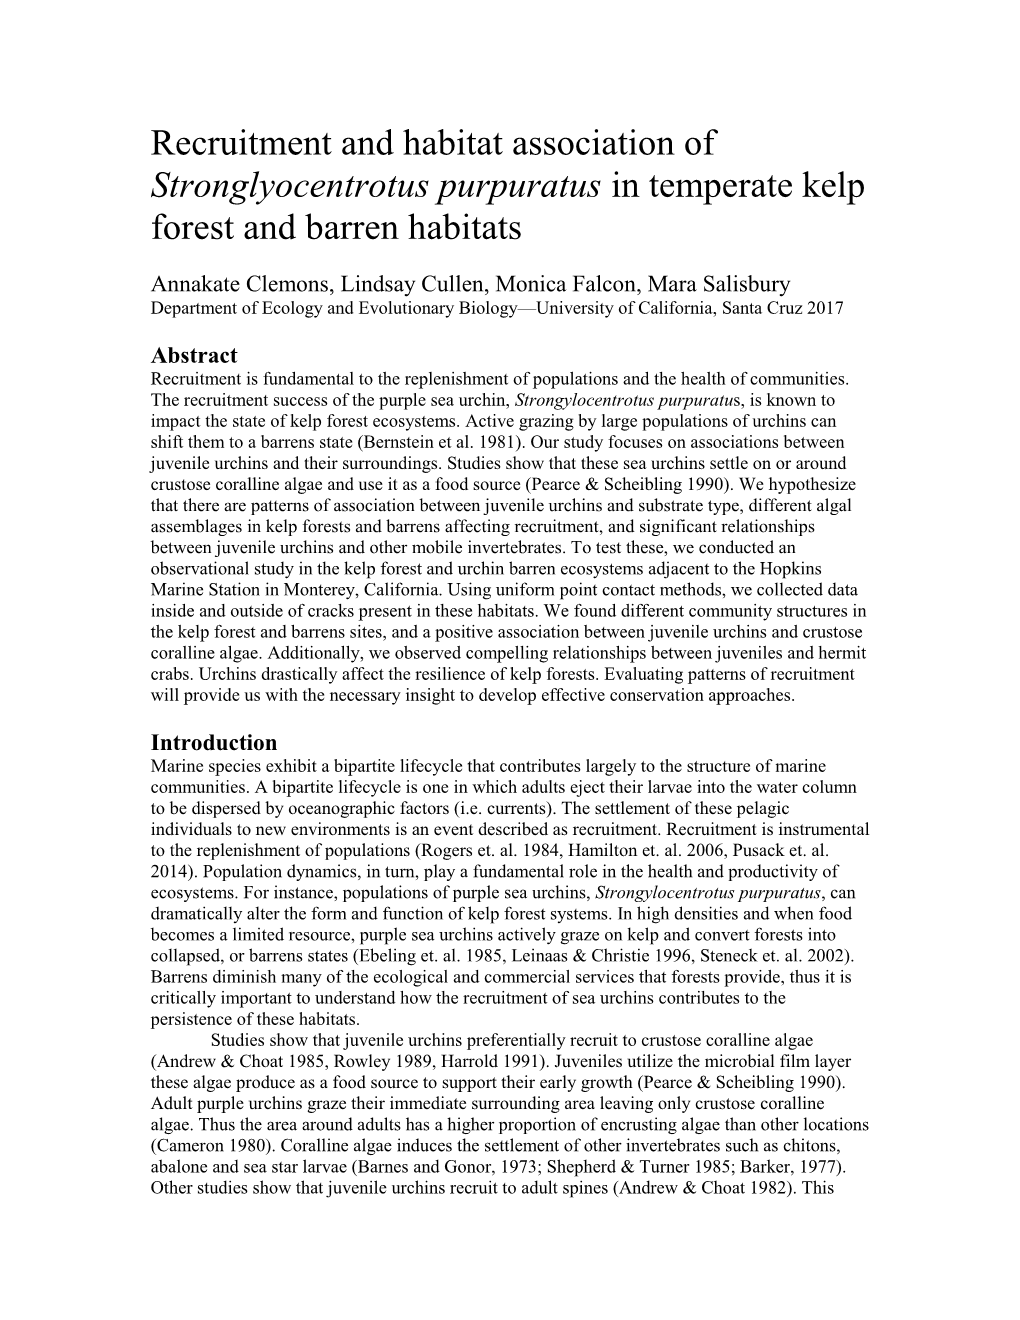 Recruitment and Habitat Association of Stronglyocentrotus Purpuratus in Temperate Kelp Forest and Barren Habitats